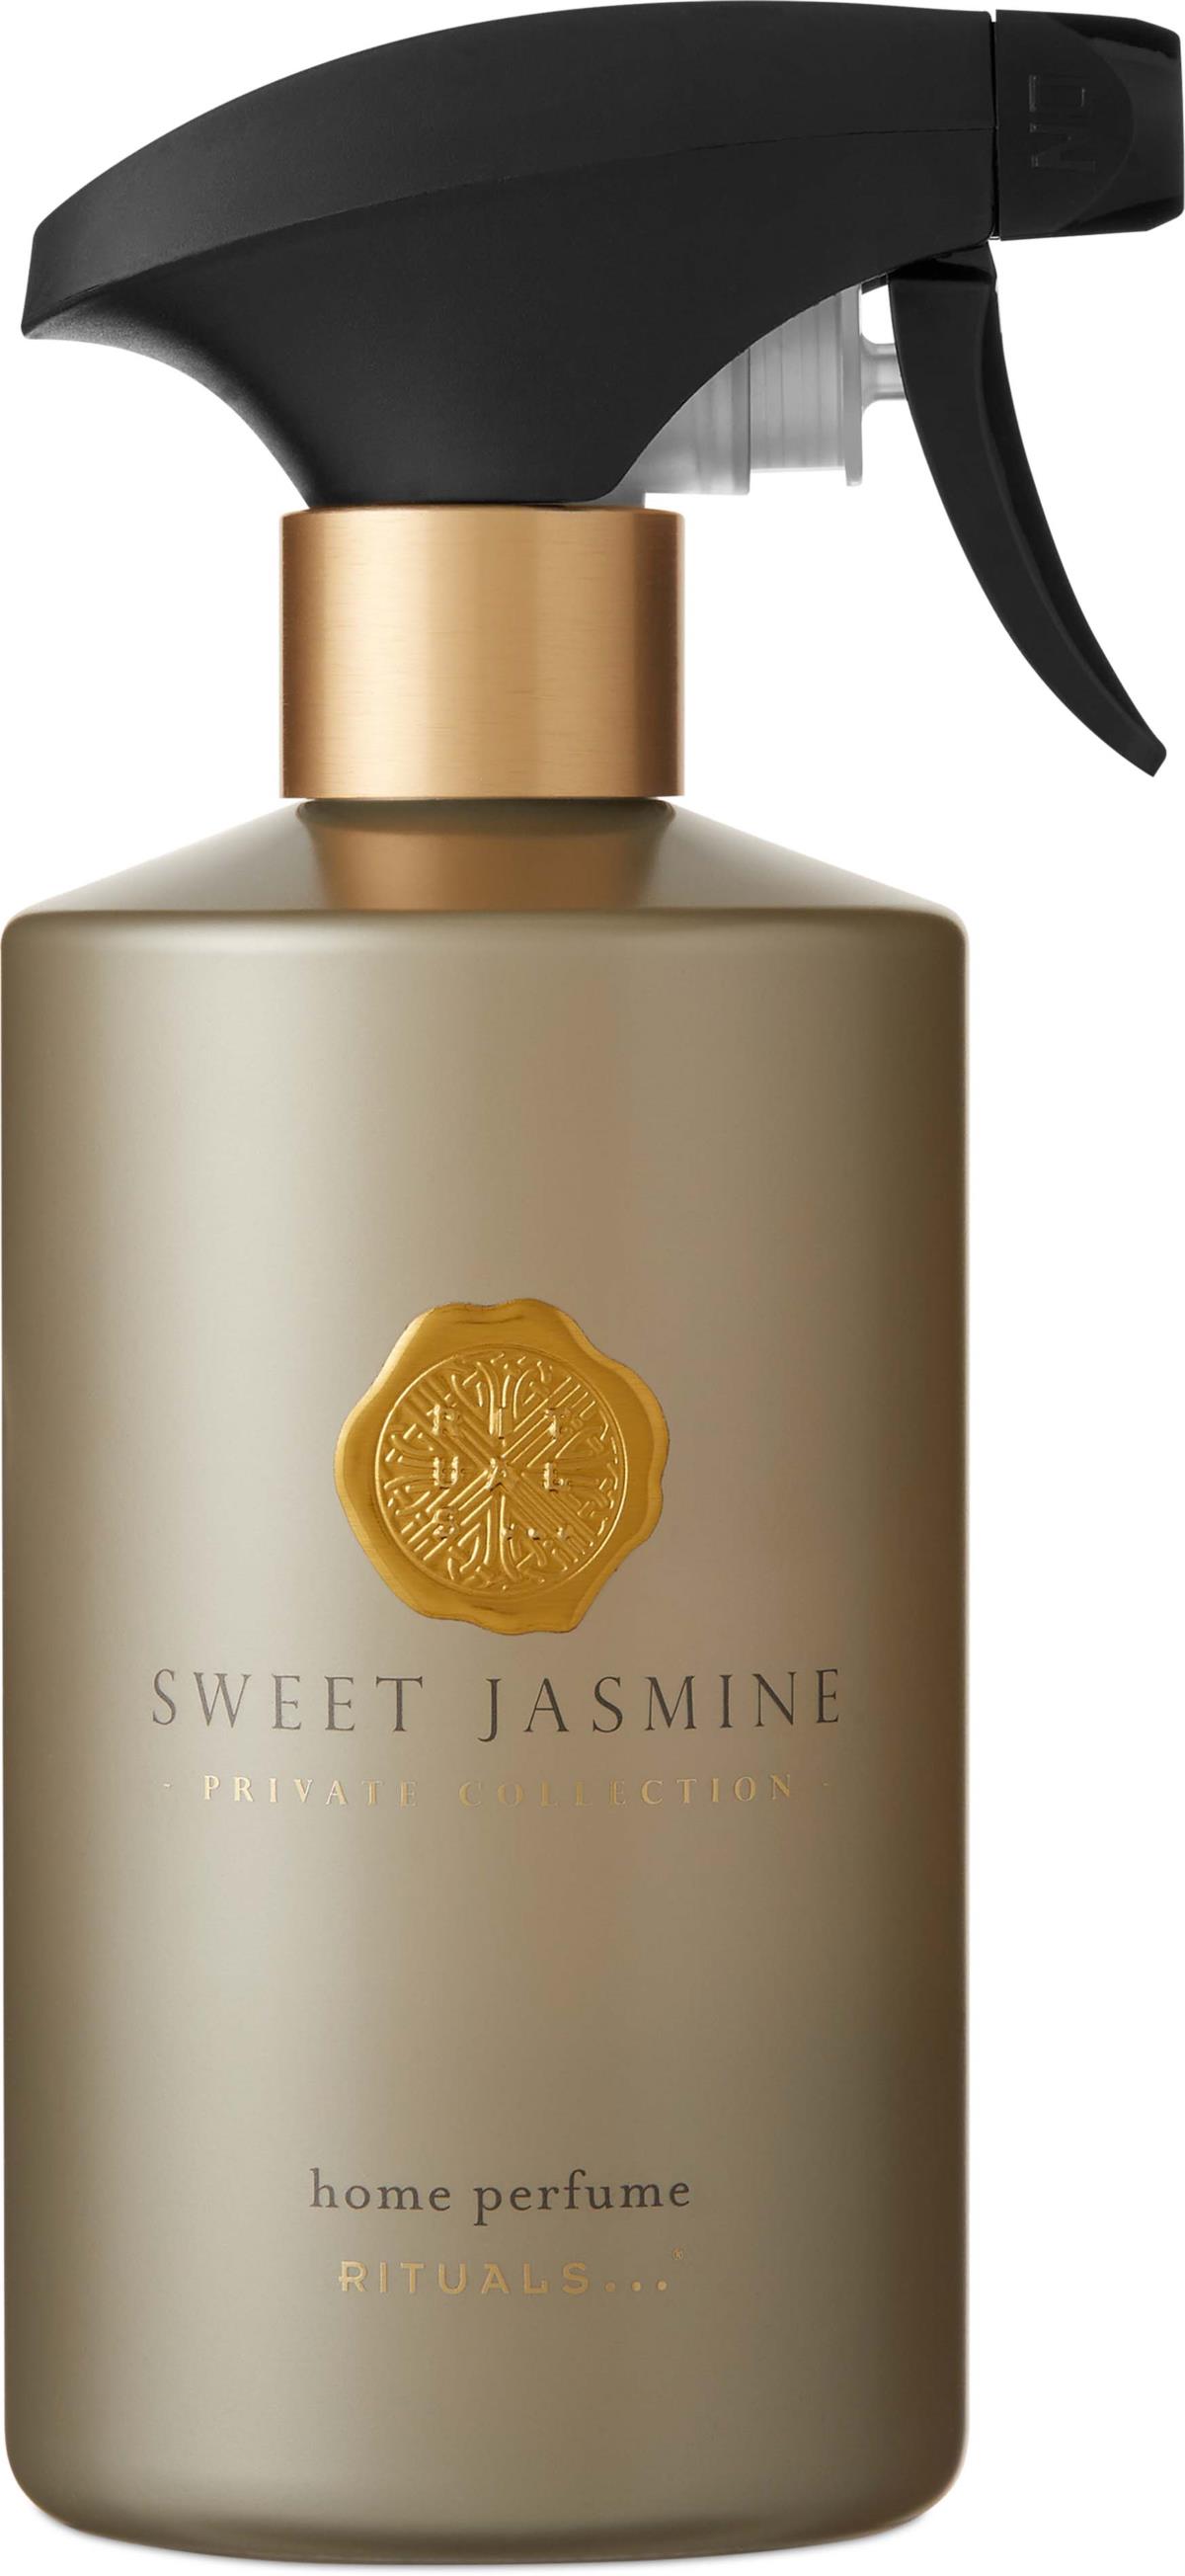 Rituals Sweet Jasmine Private Collection Parfum dInterieur 500 ml